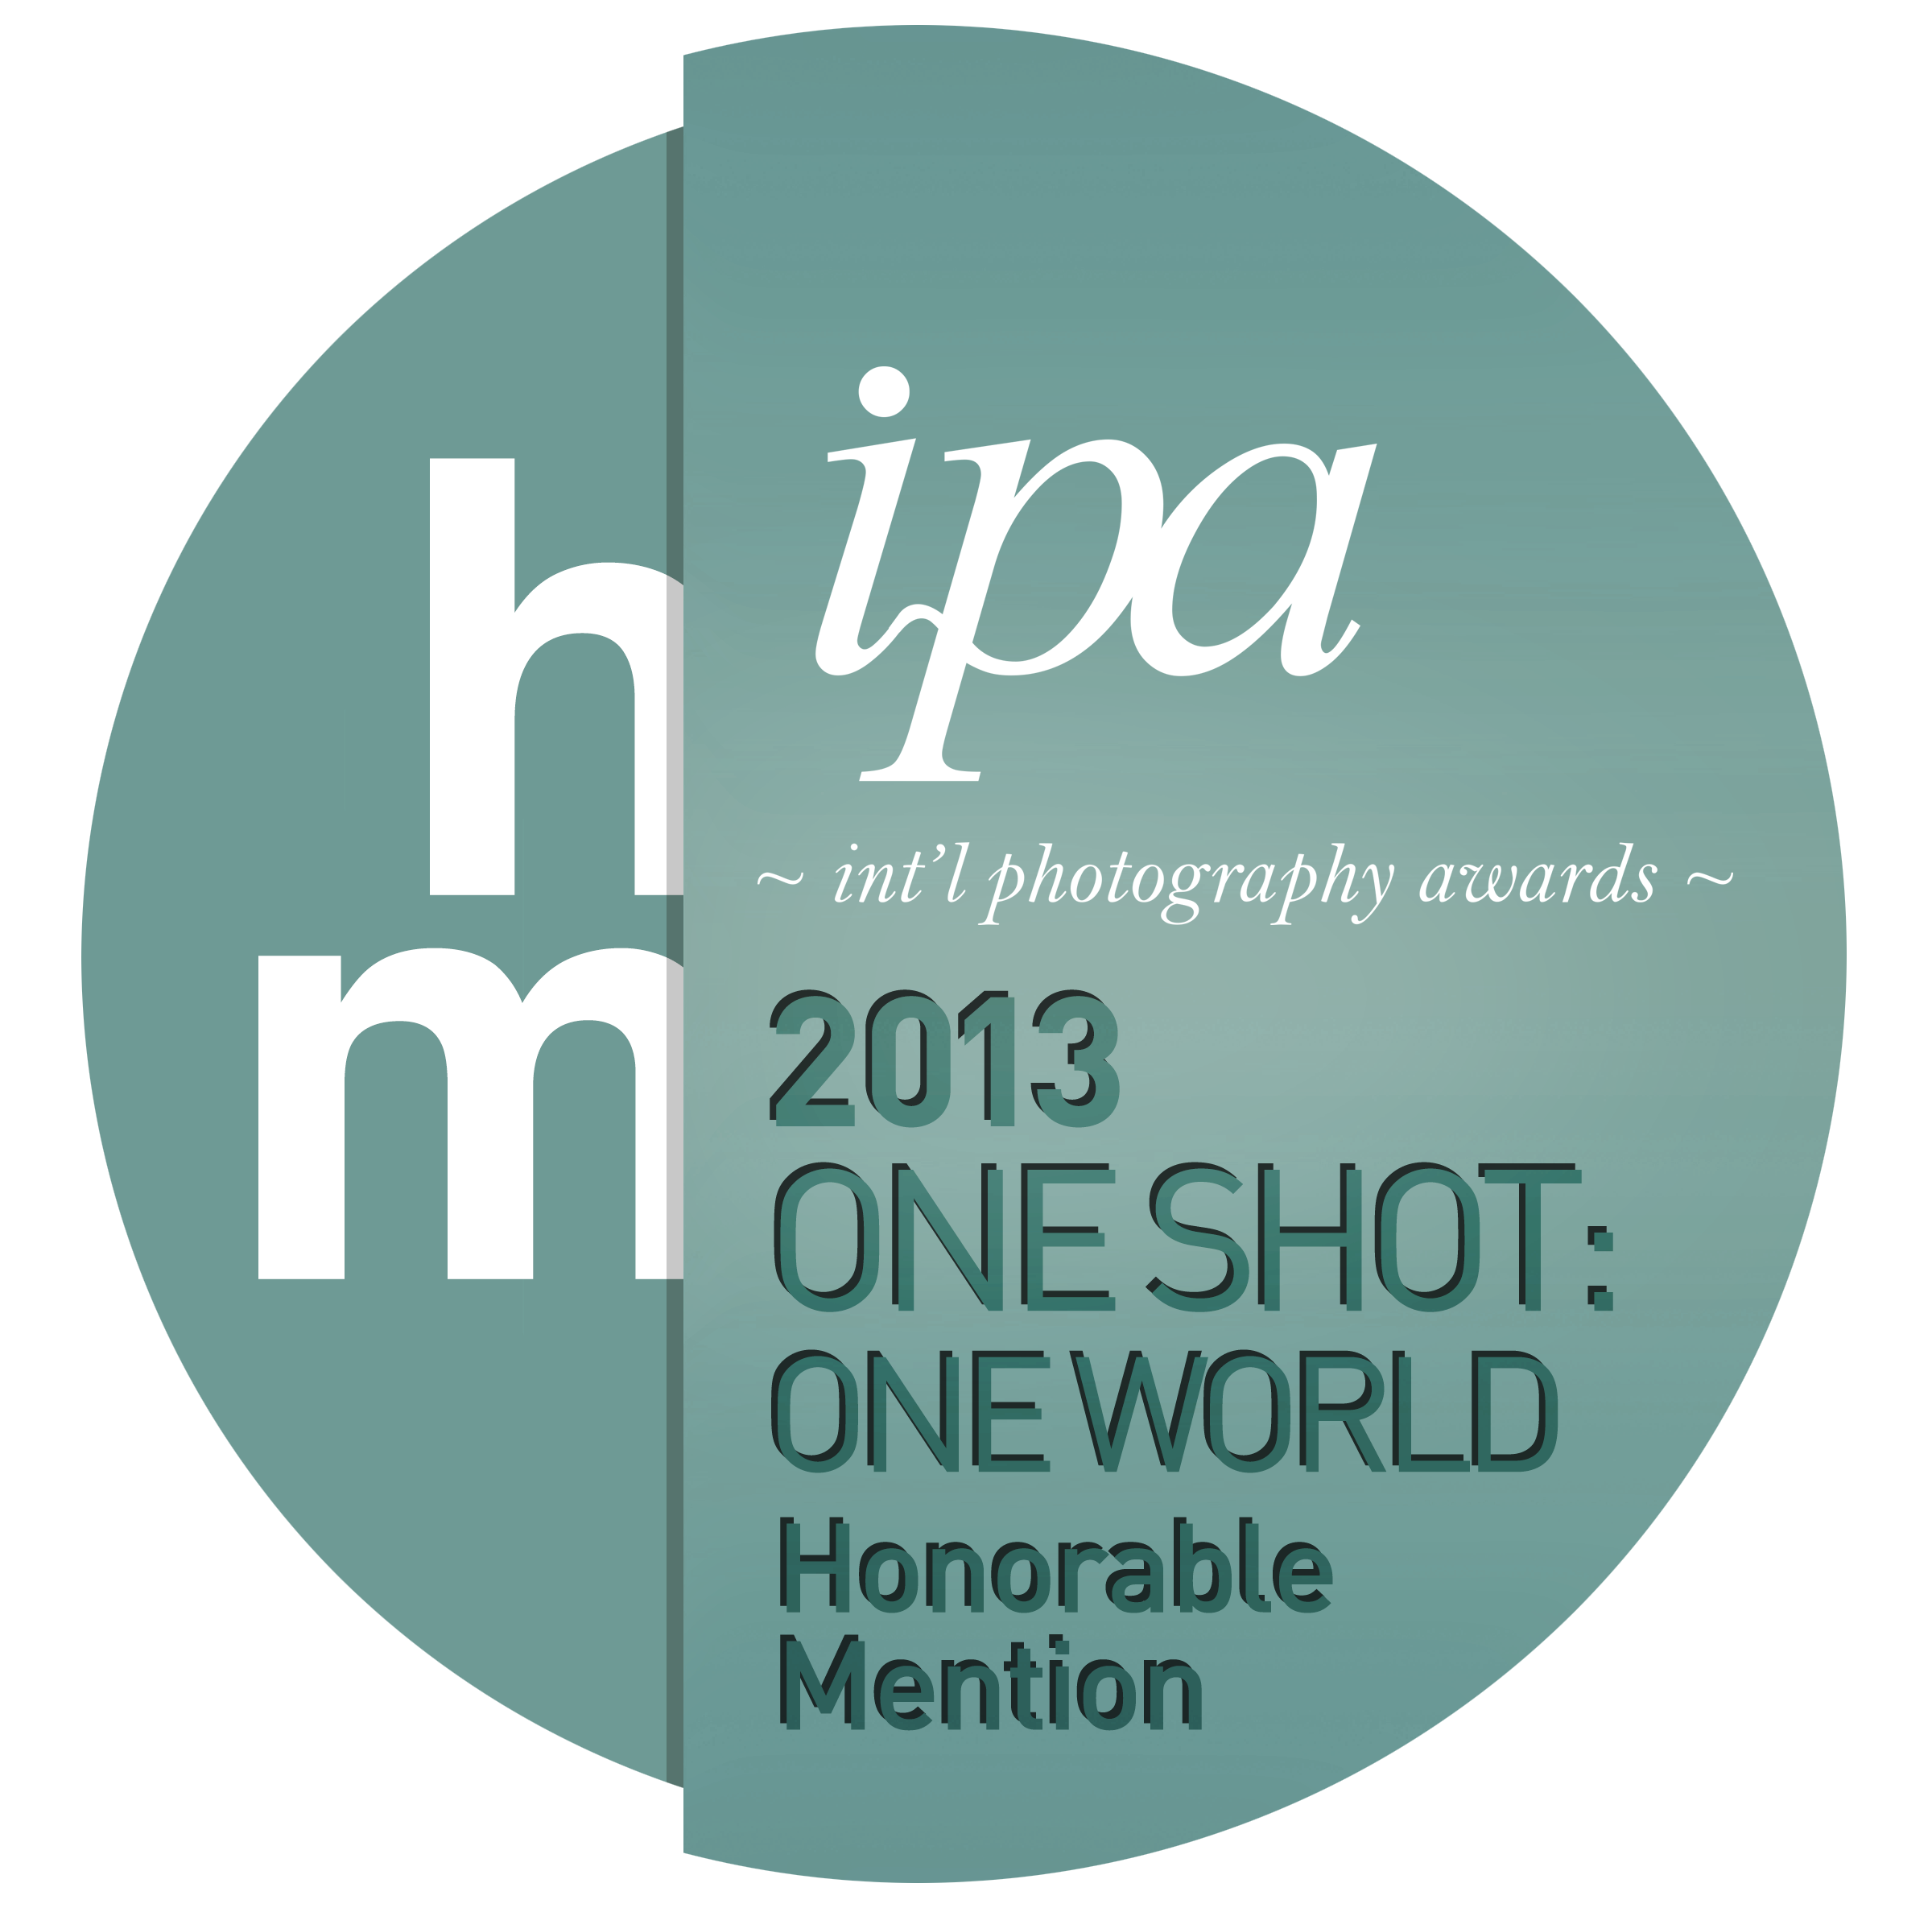  Honoroable Mention, International Photography Awards - One Shot:One World, 2013, Balcony Life 